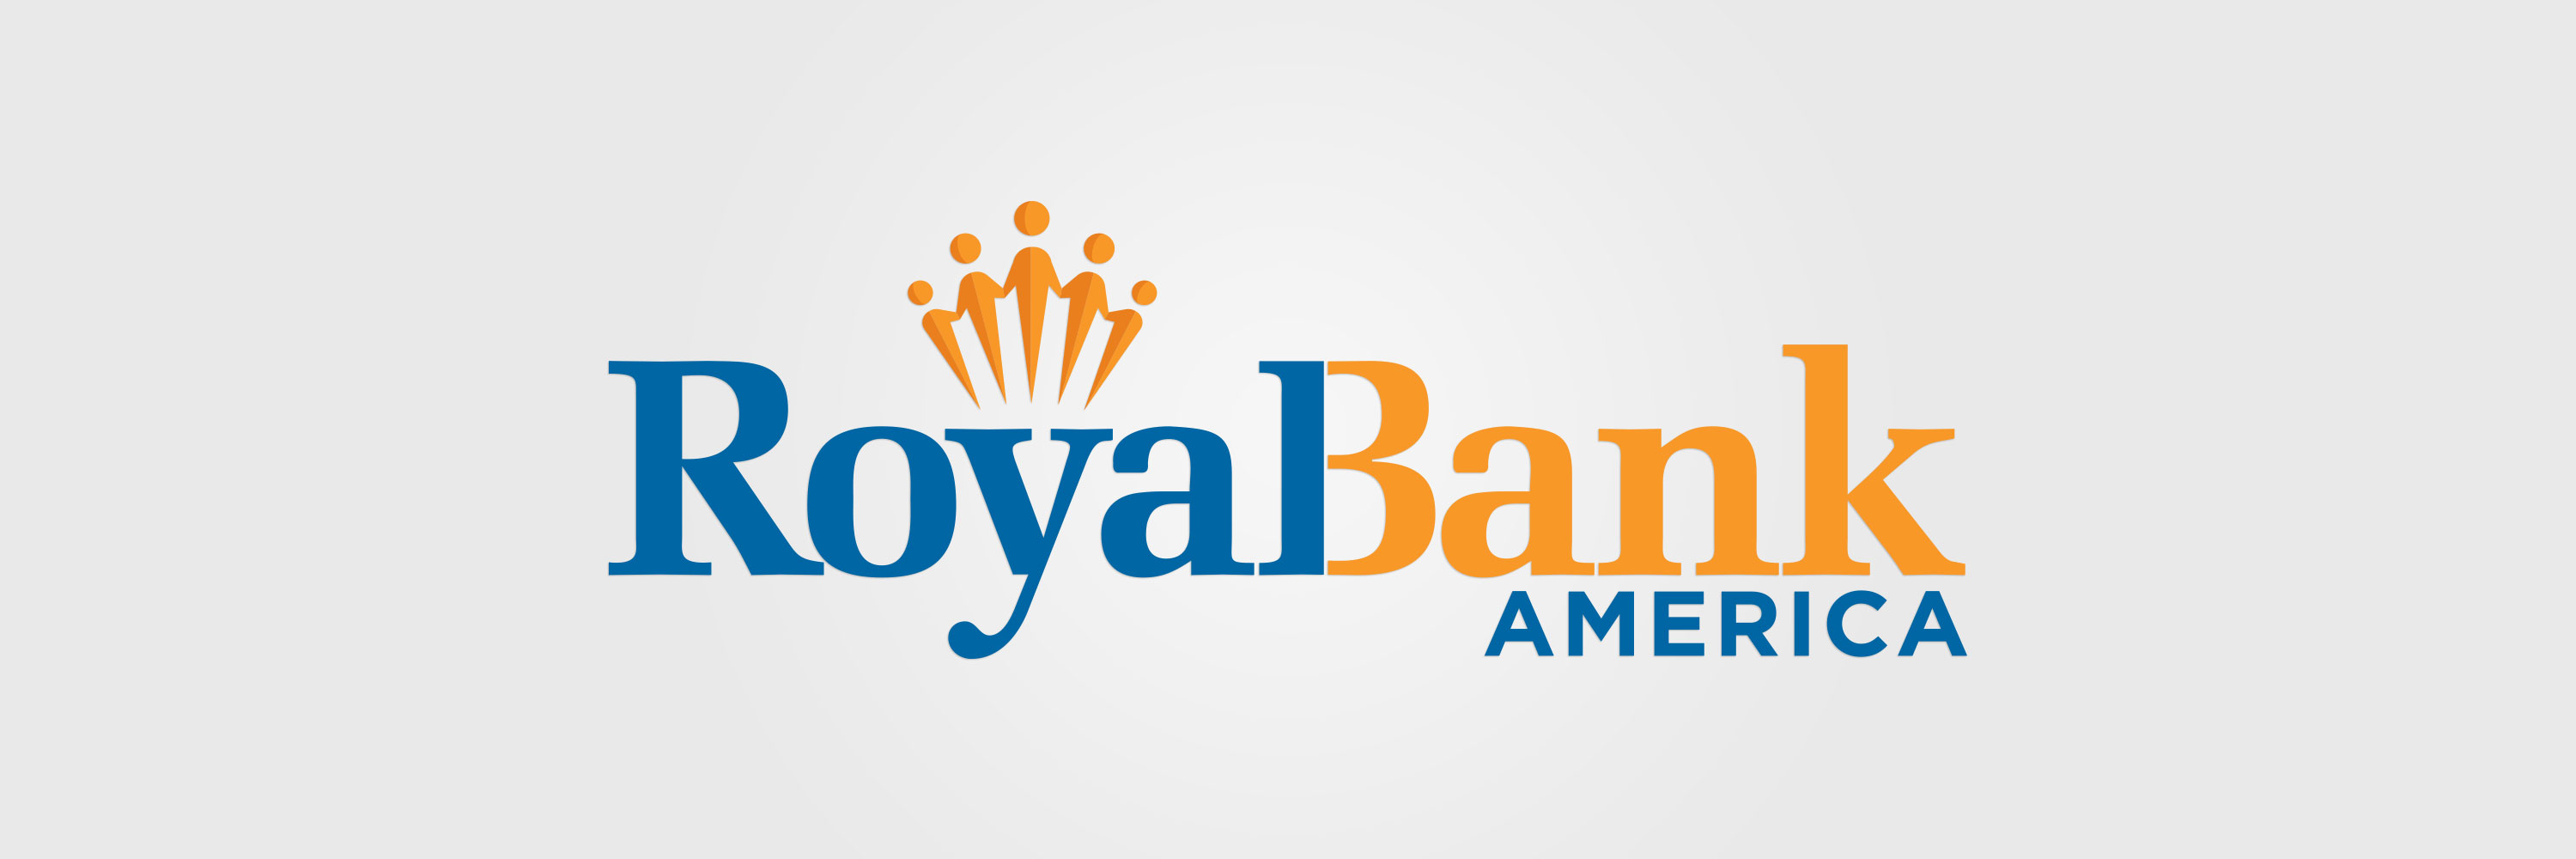 Royal Bank America Logo and Brand Development